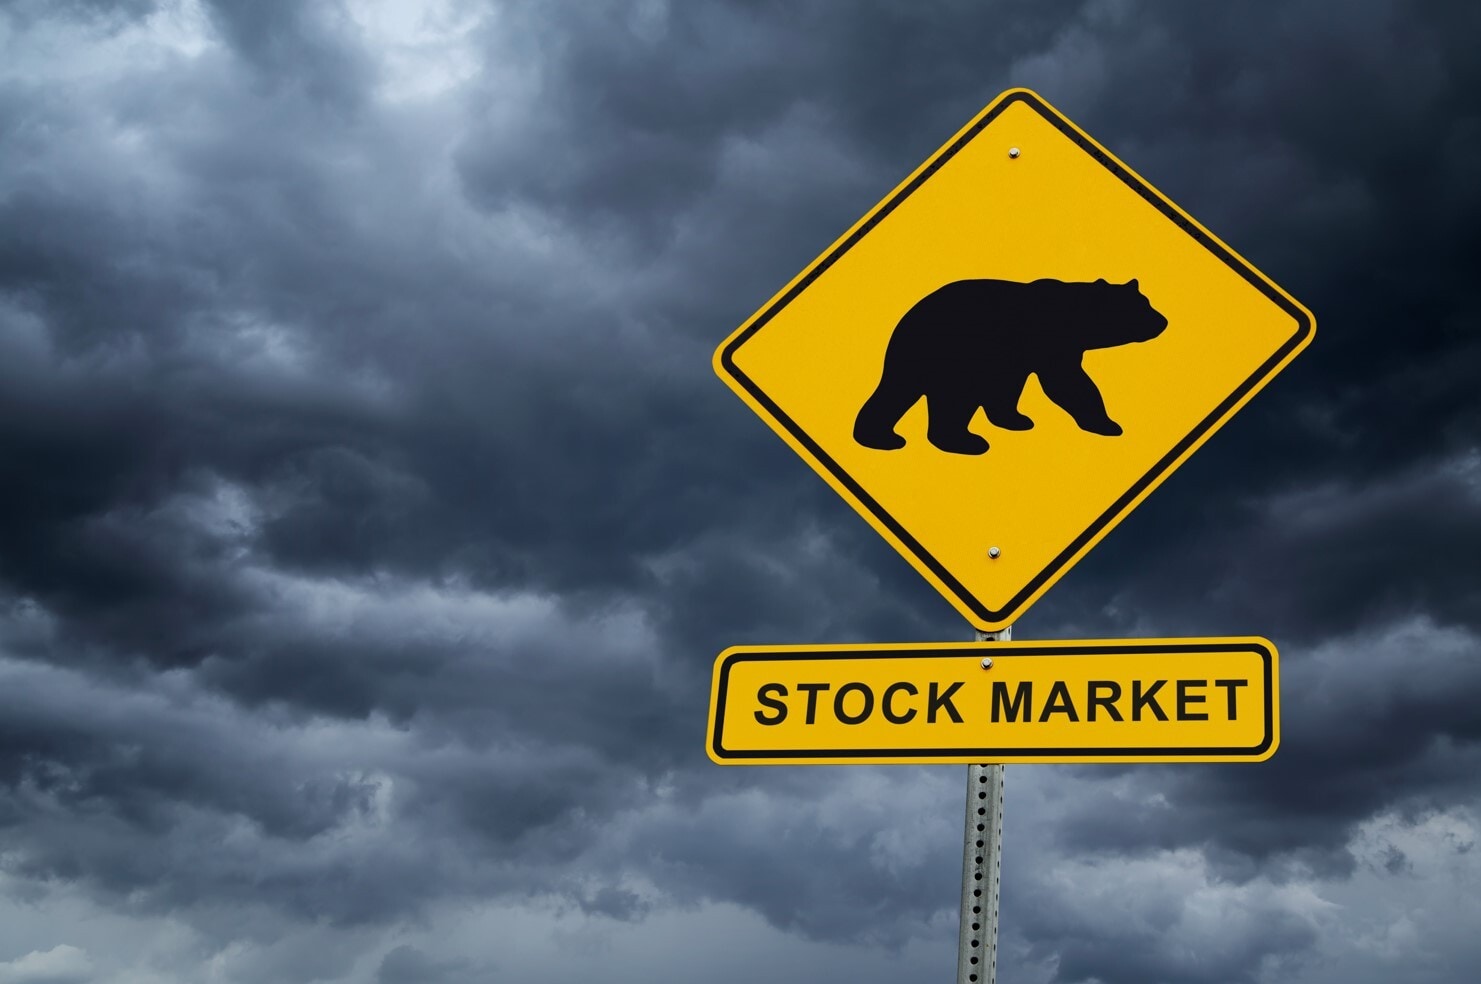 bear market